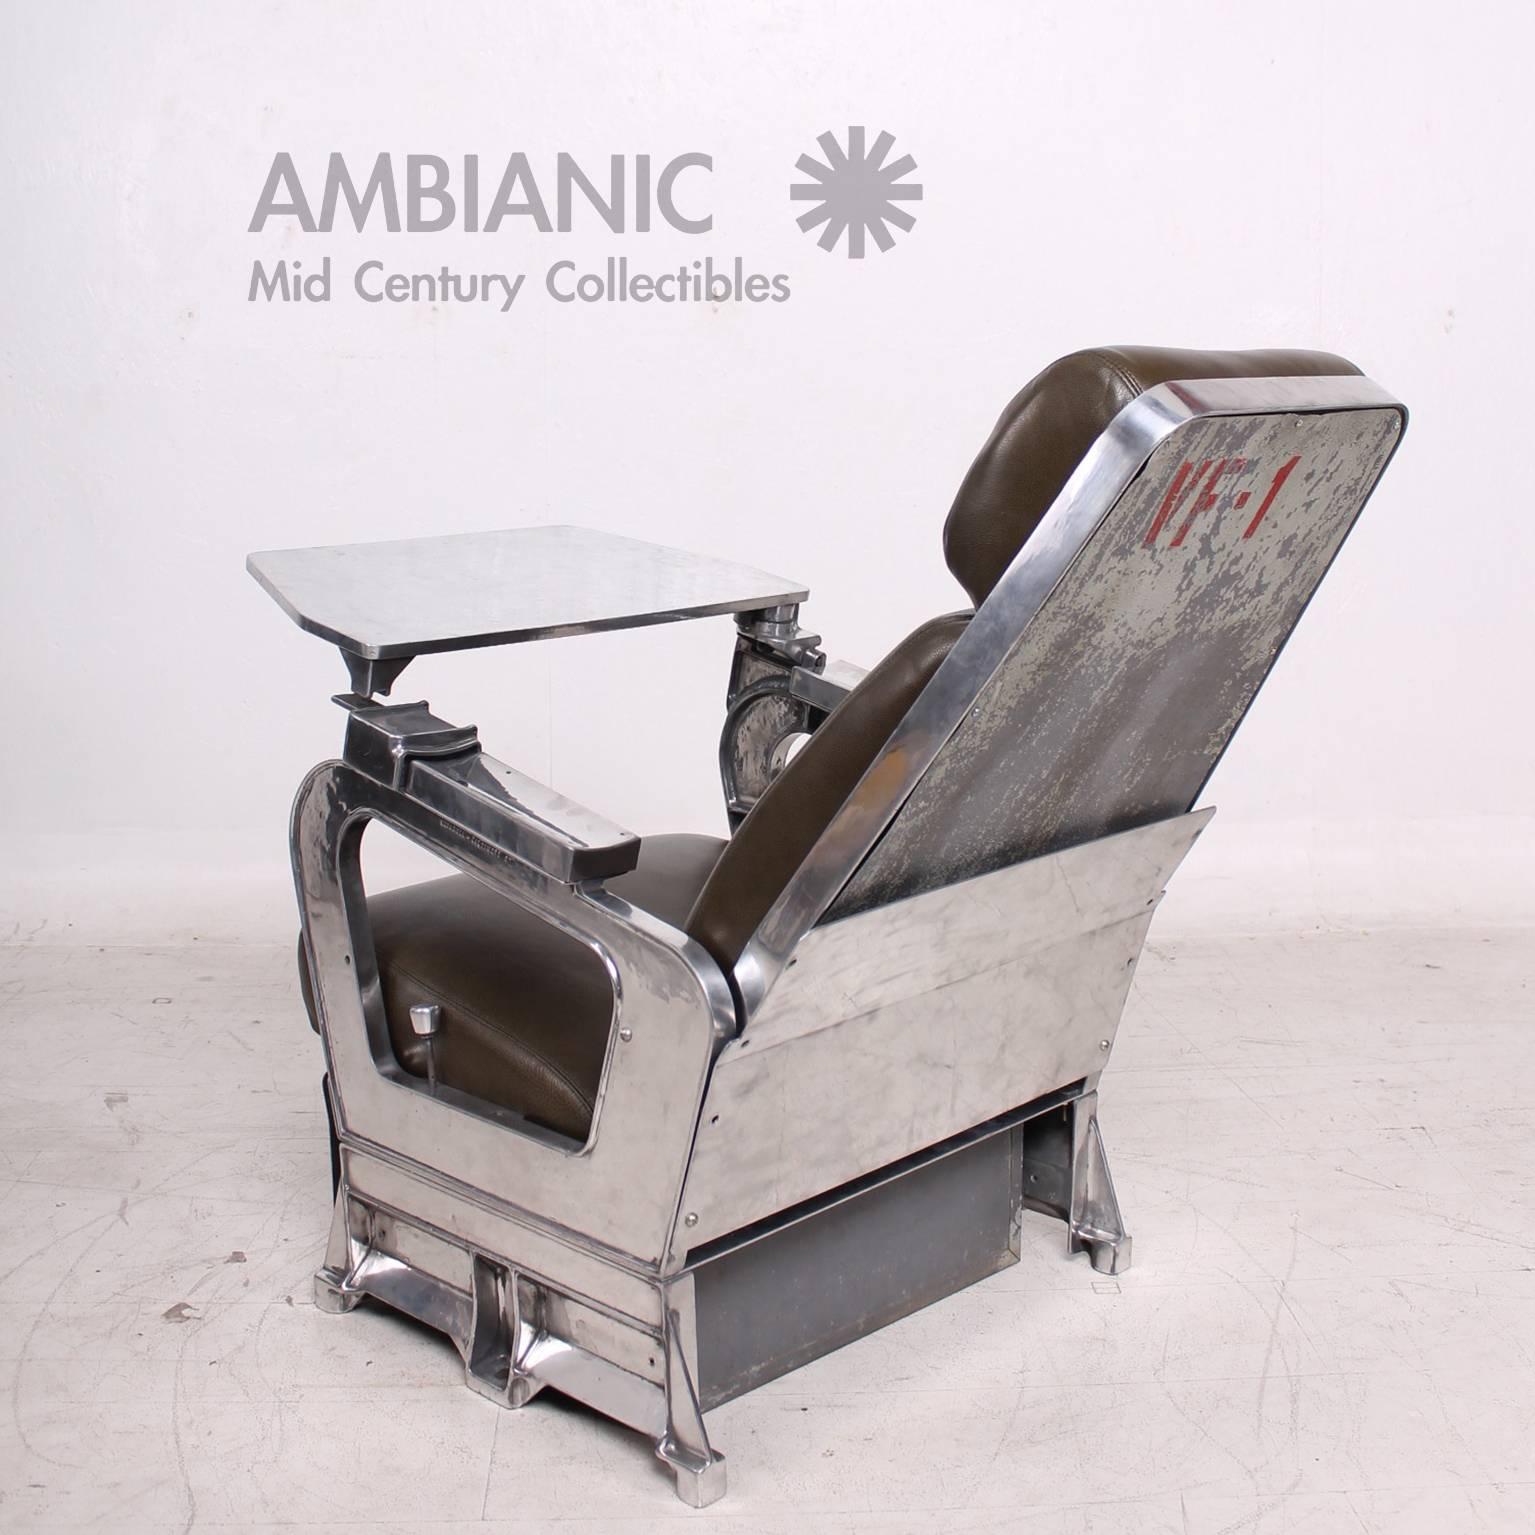 Mid-20th Century Mid-Century Modern Aluminum Airplane Chair